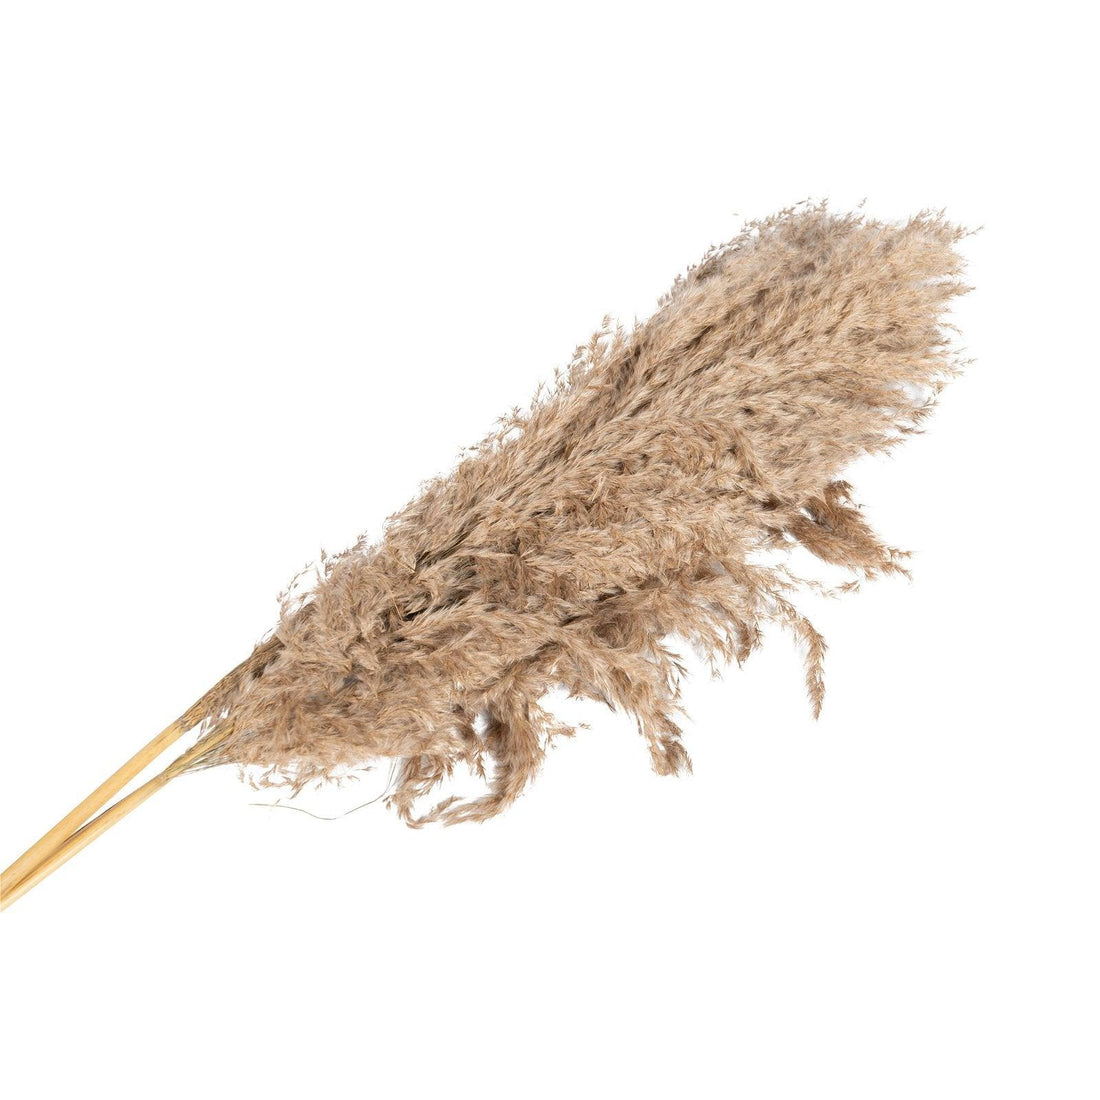 Naturally Dried Pampass Grass Stem 79cm - £16.99 - Flower Sprays 